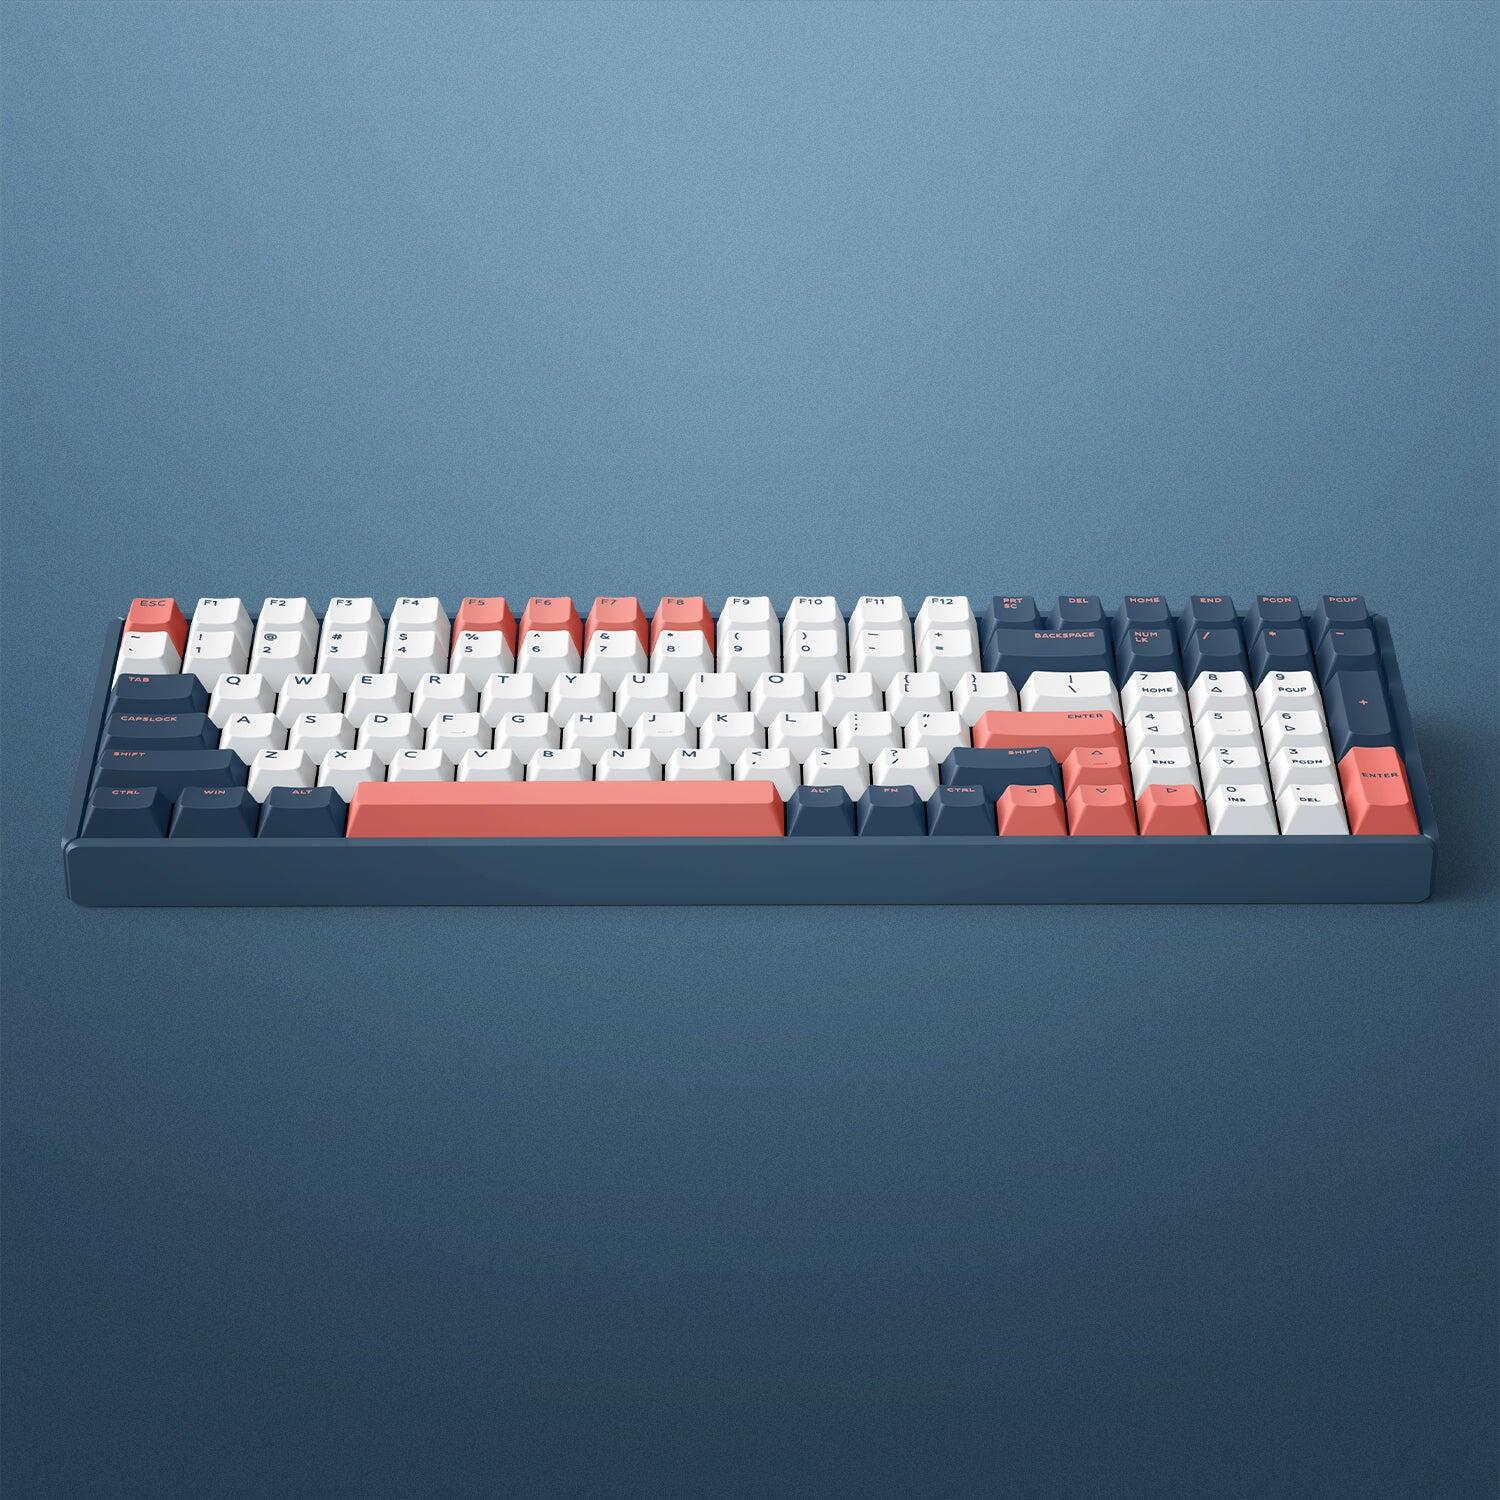 Iquinix Keyboard